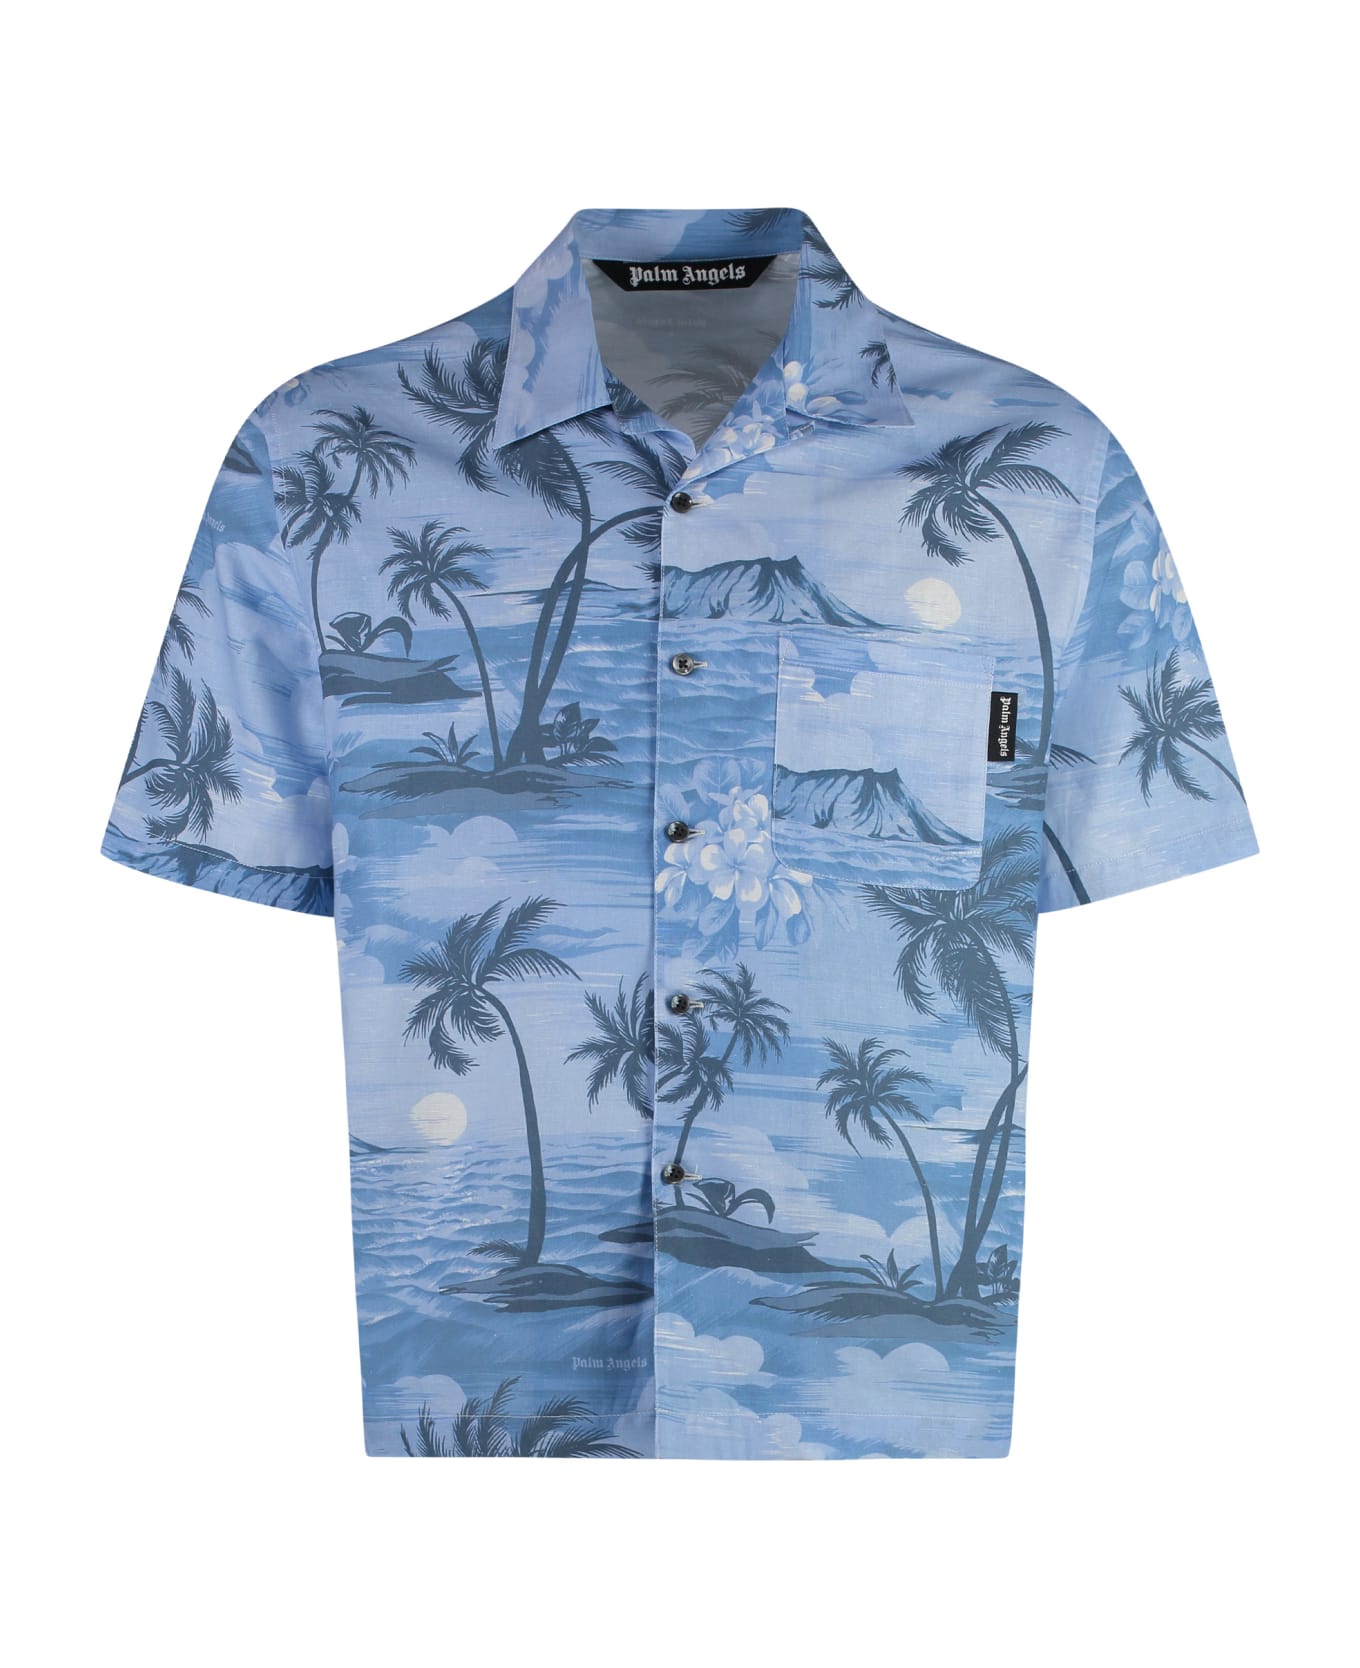 Palm Angels Blend Printed Cotton Shirt - Light Blue